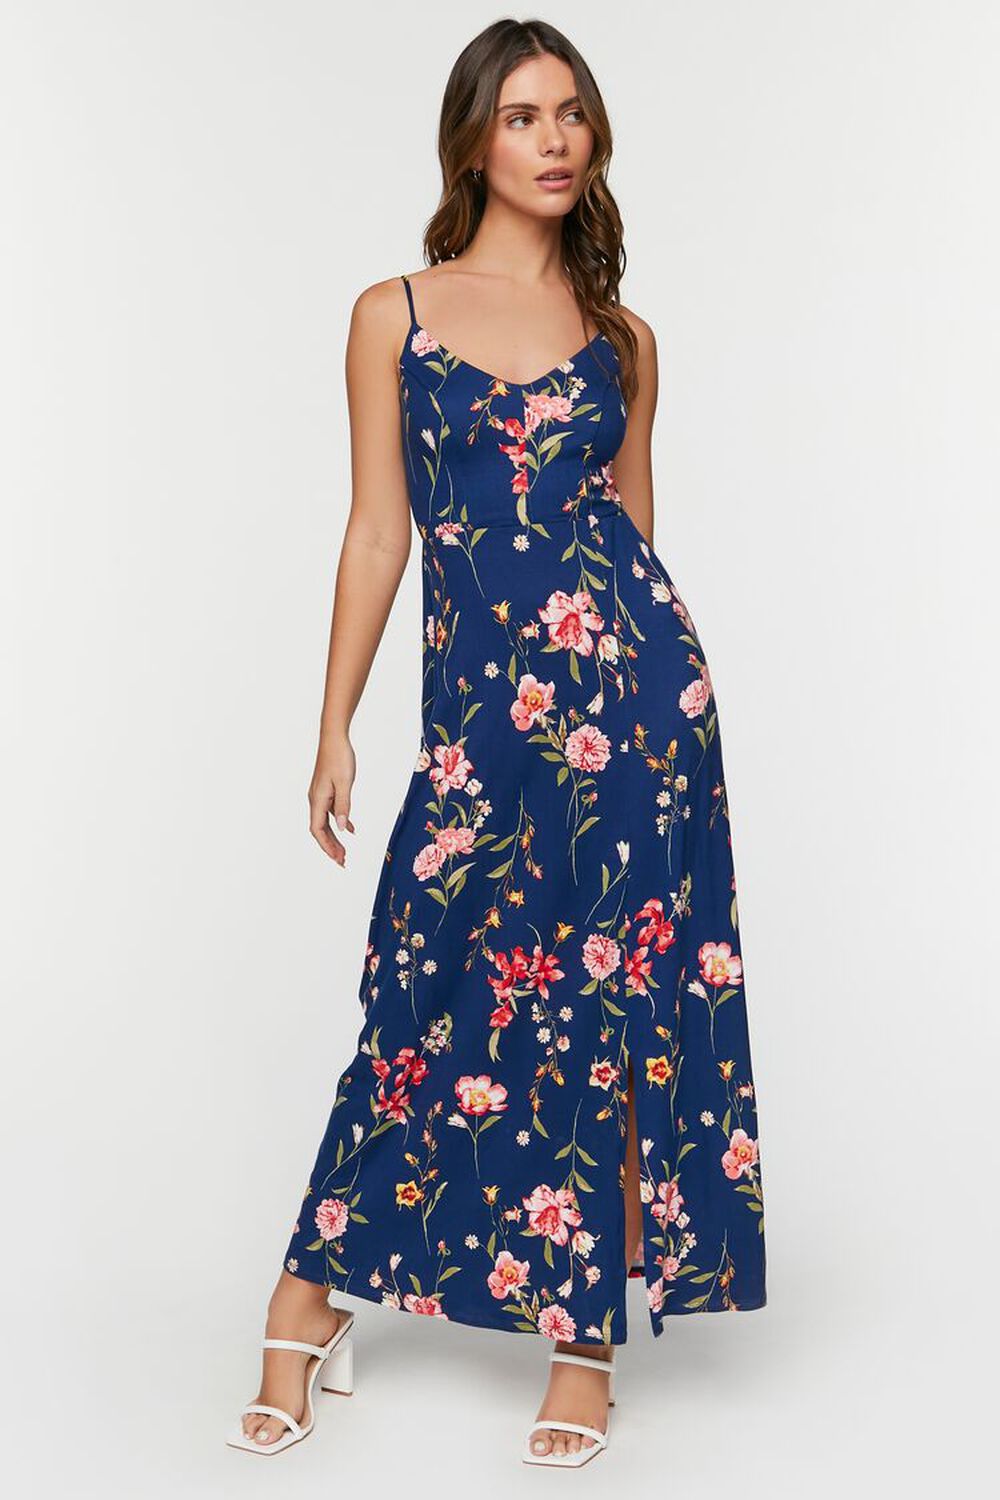 NAVY/MULTI Floral Print Cami Maxi Dress, image 1